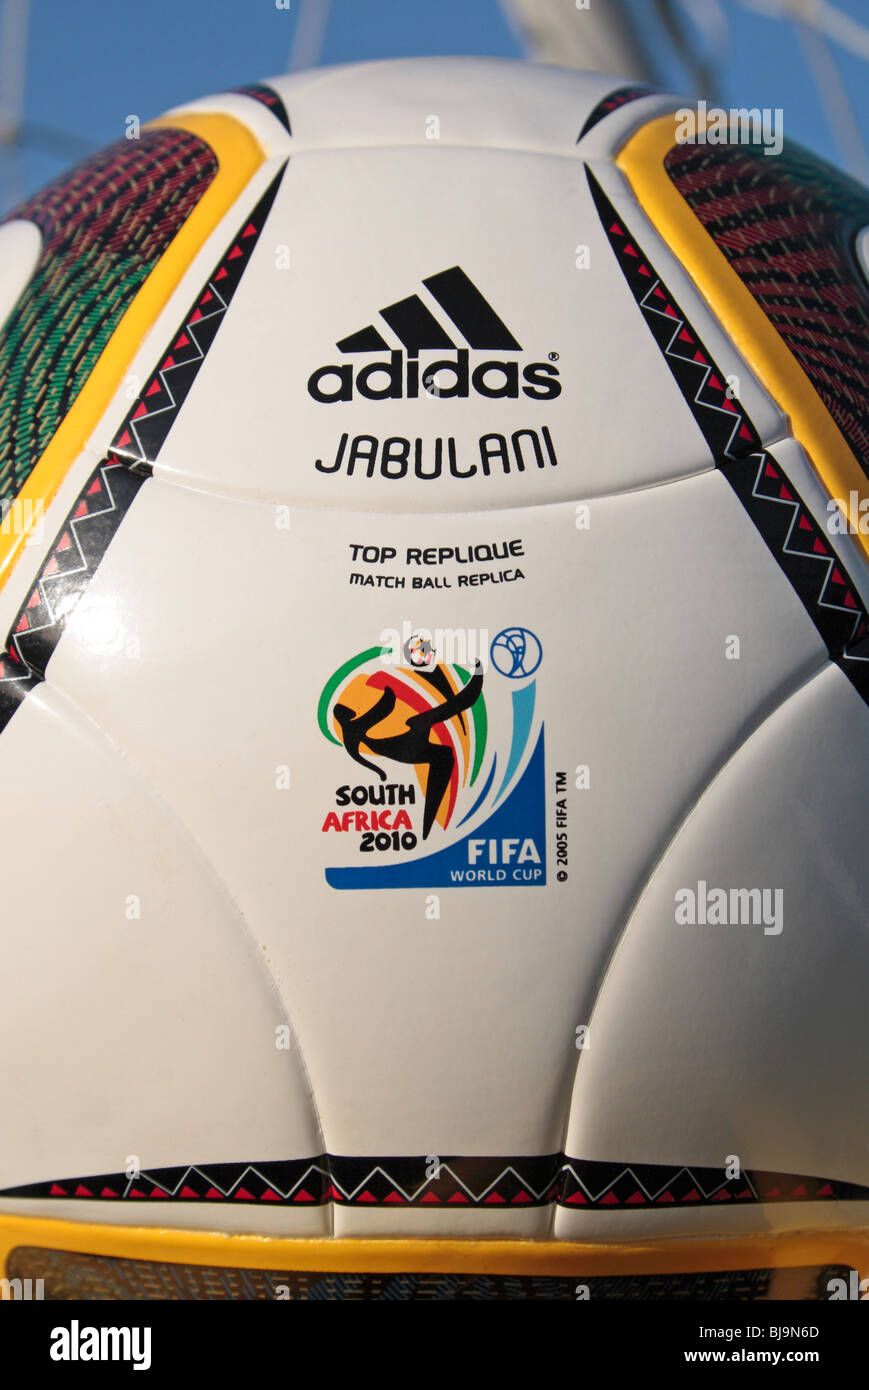 Cerca de una réplica de la Copa Mundial 2010 match ball Adidas, el Jabulani, en la esquina de un campo de fútbol net stock - Alamy